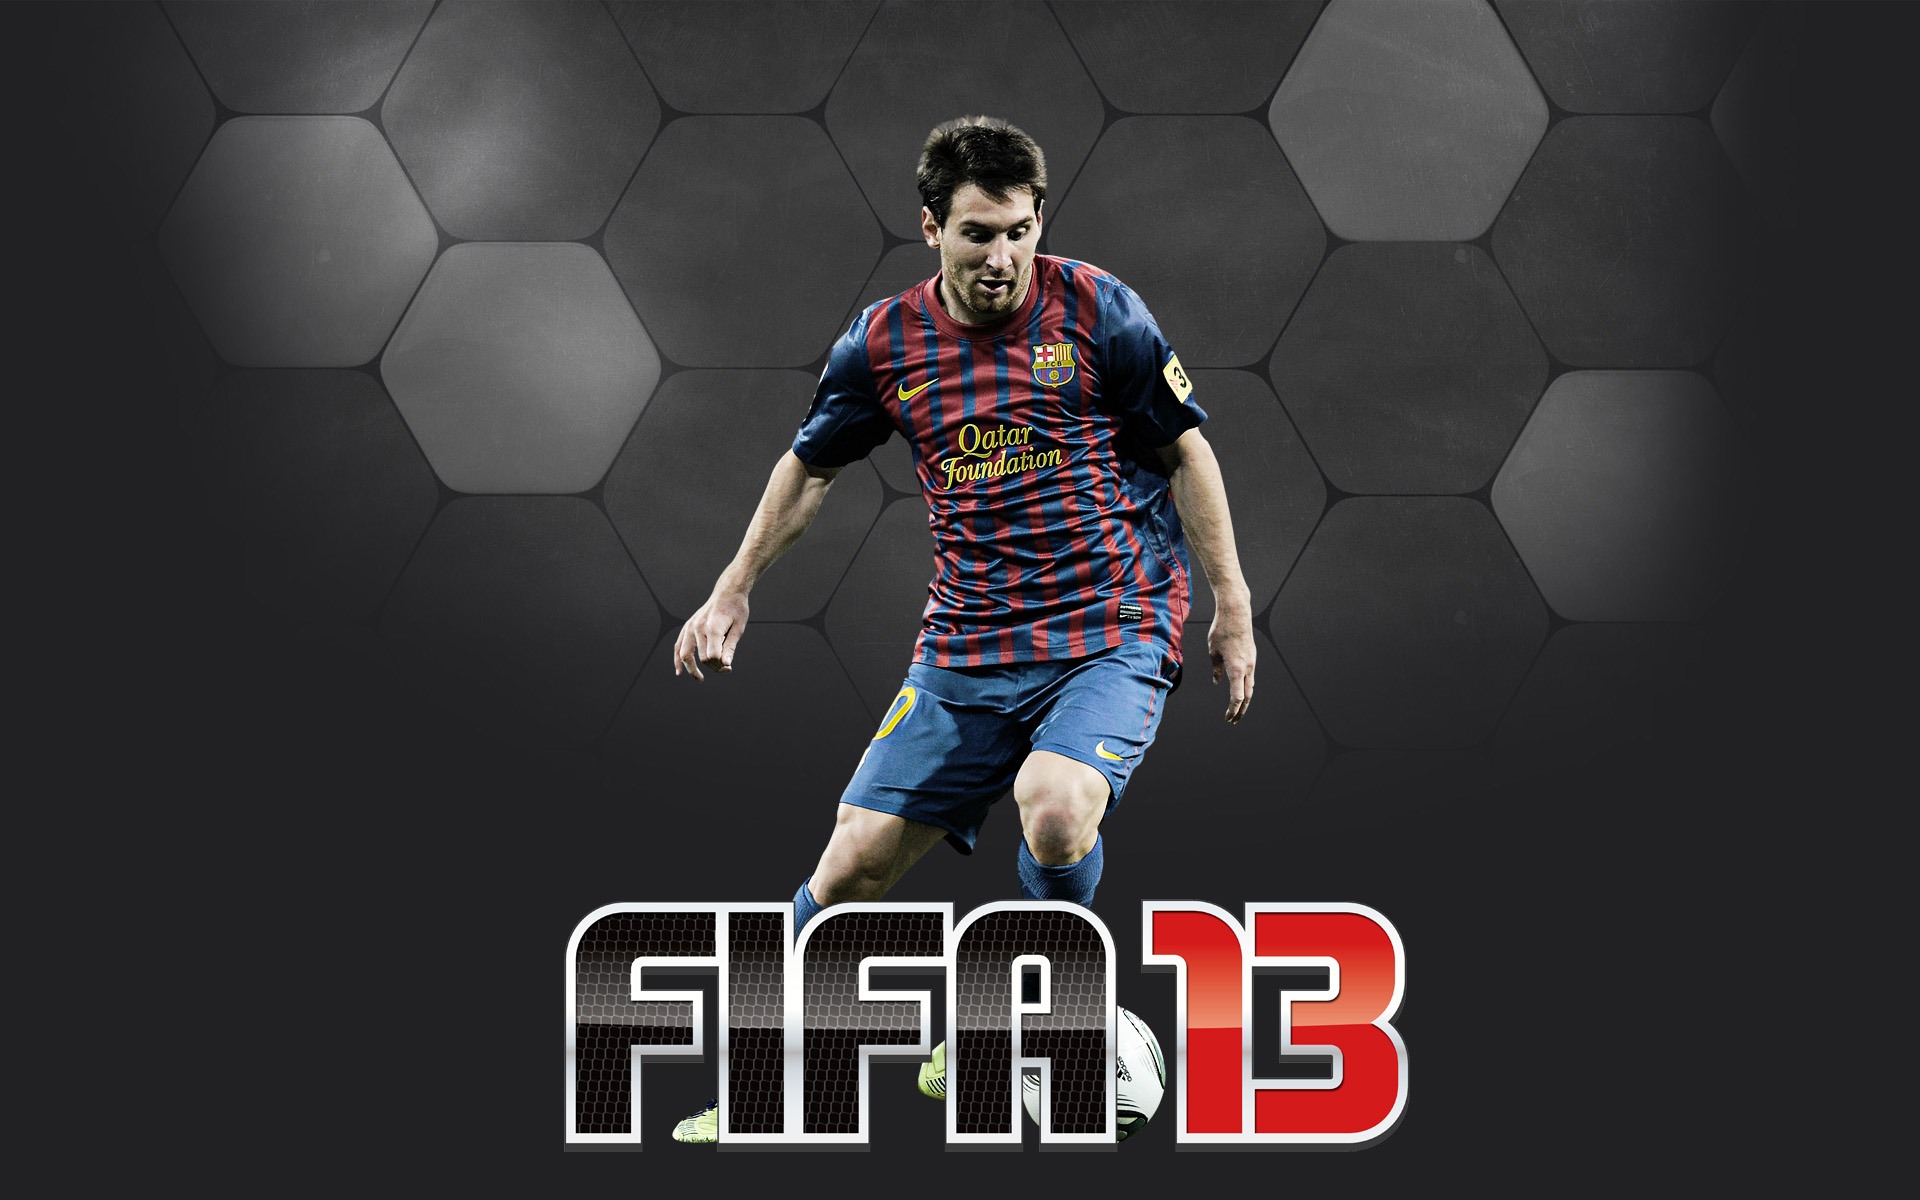 FIFA 13 游戏高清壁纸6 - 1920x1200